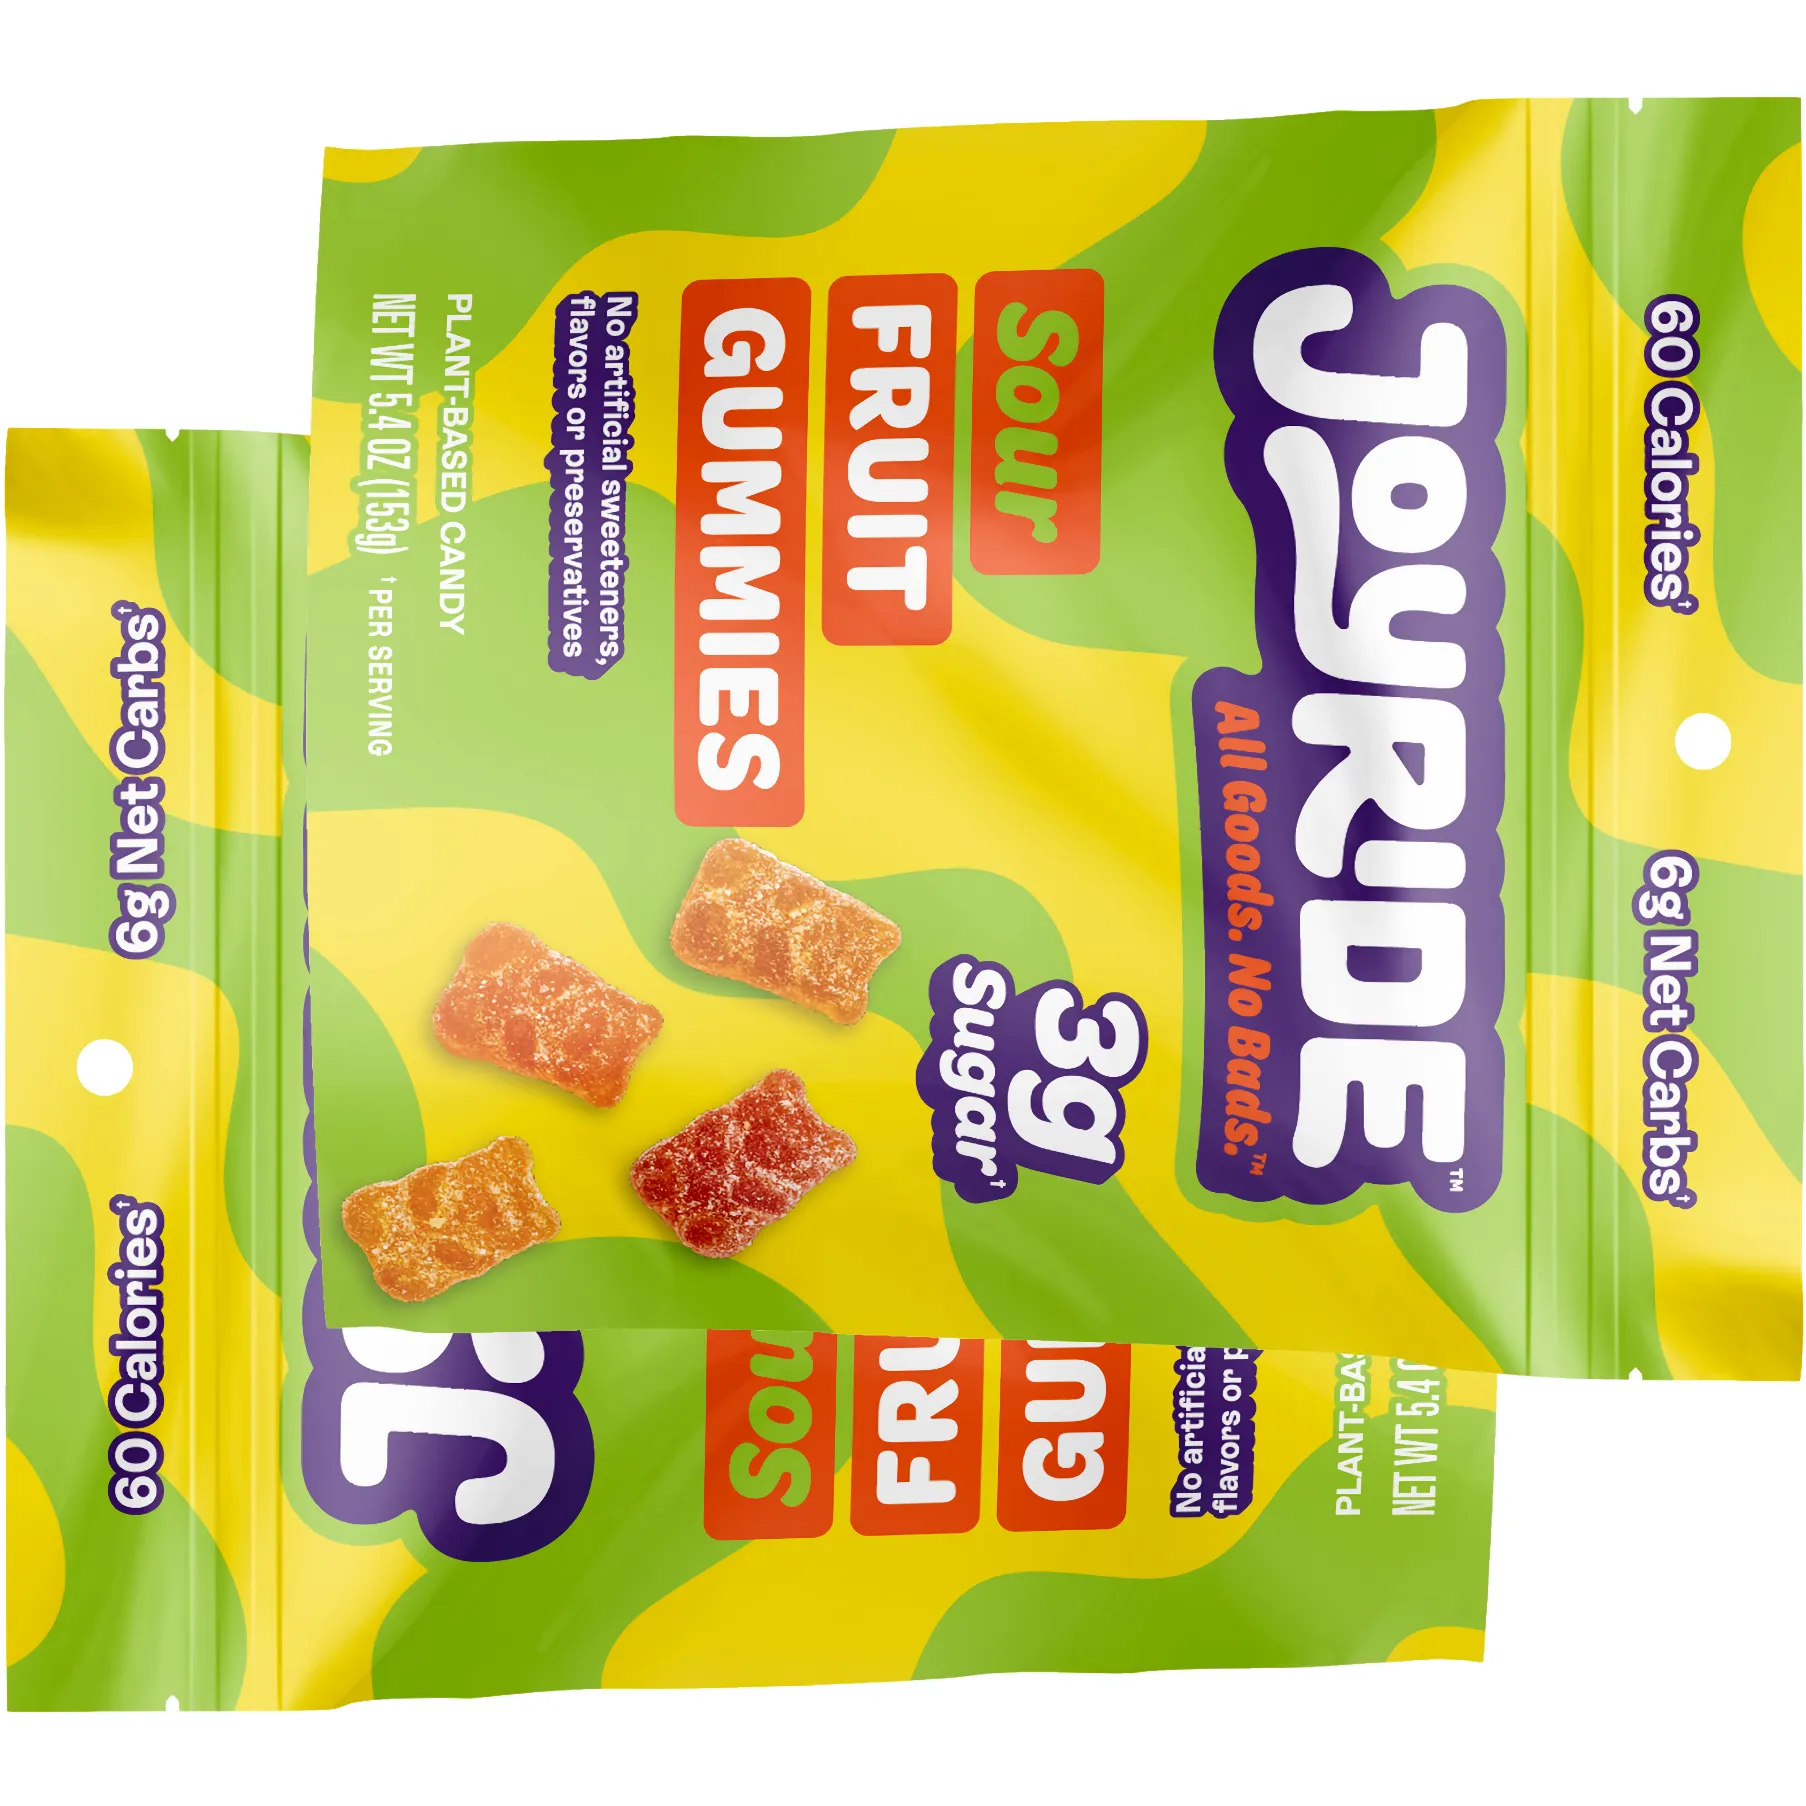 Free Joyride Zero Sugar Candy